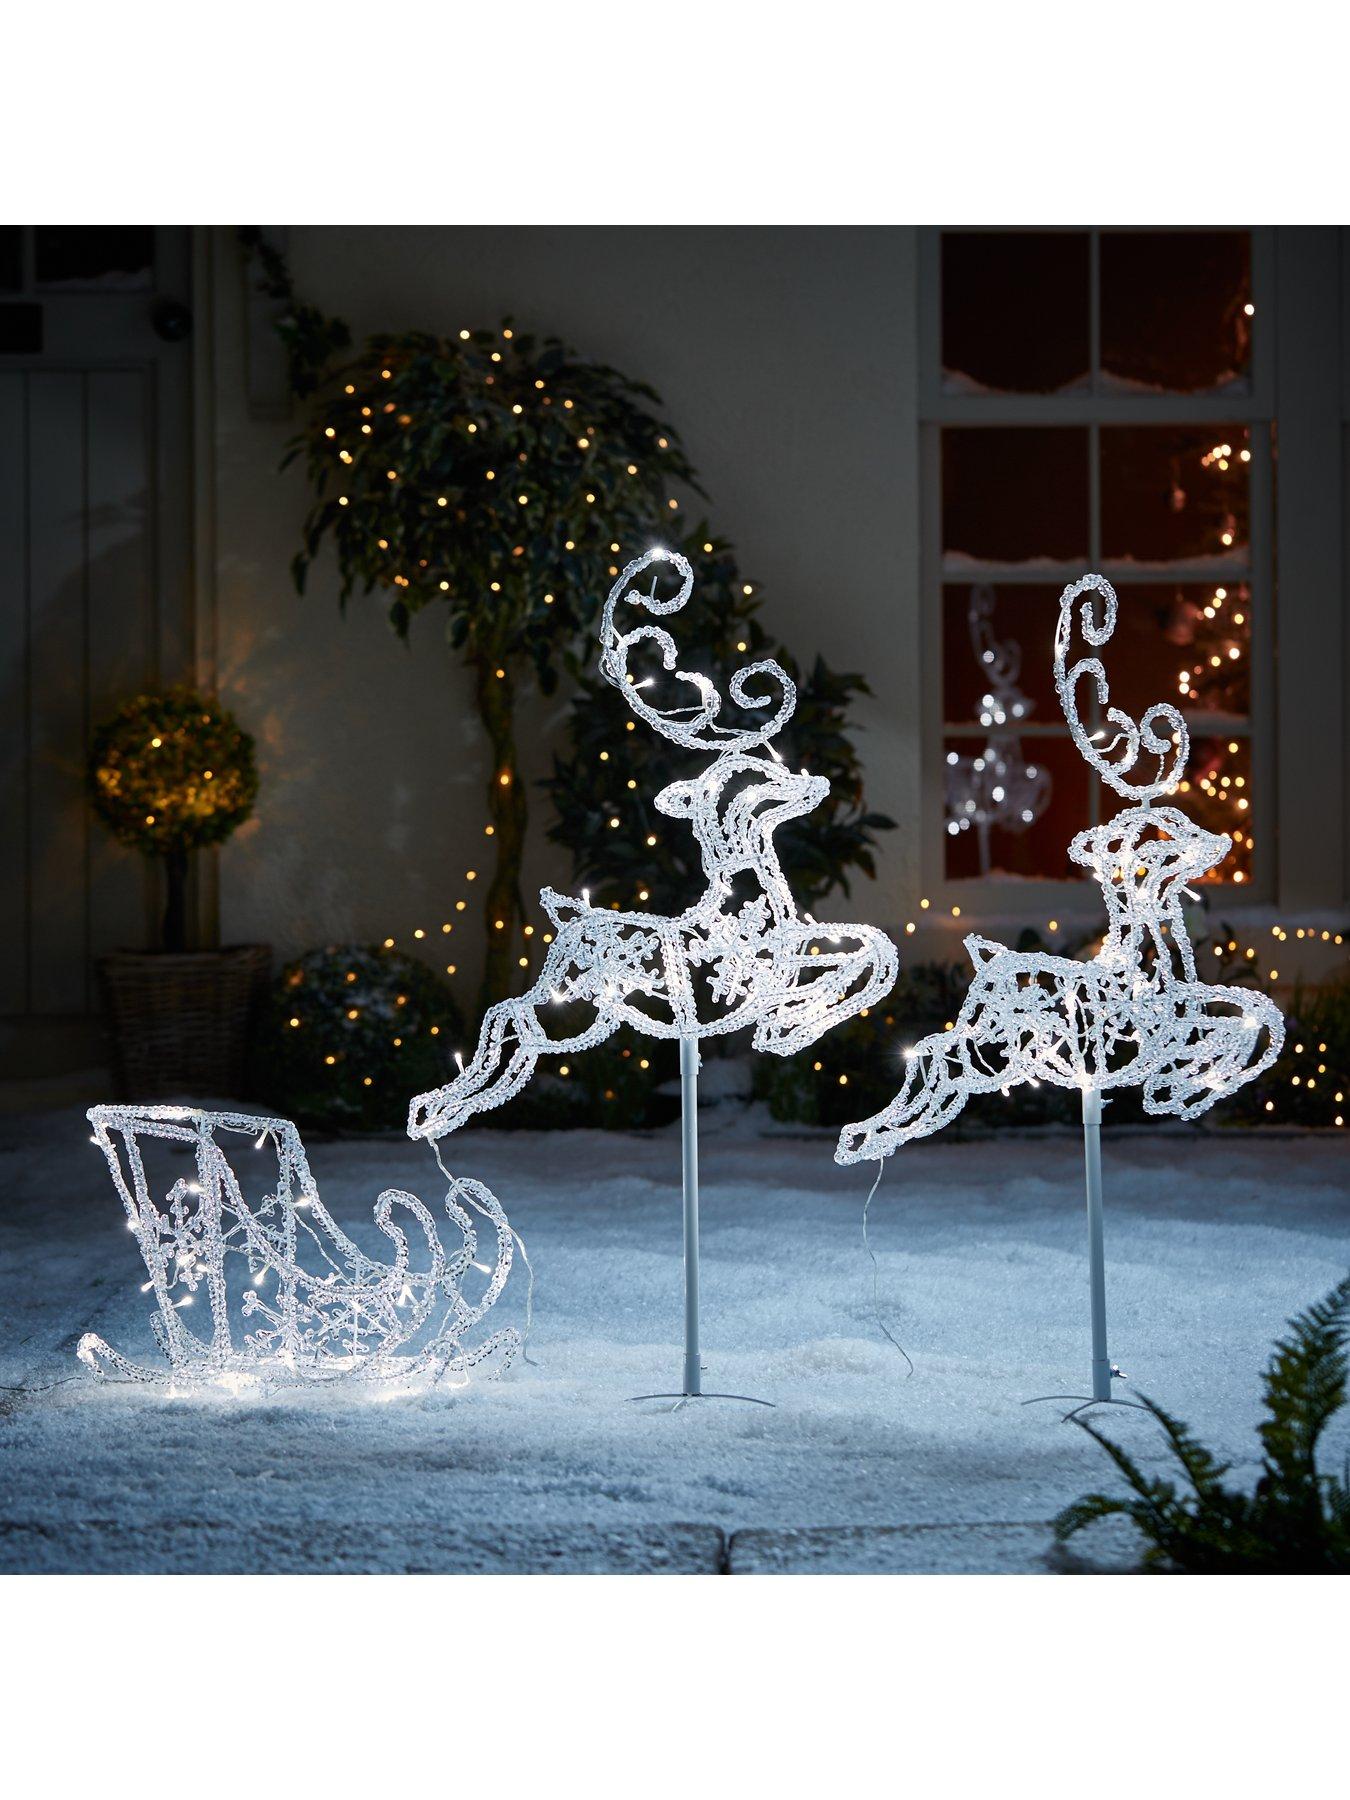 Jewelled Unicorn Head with 100 White Twinkling LEDs Stunning Christmas Display